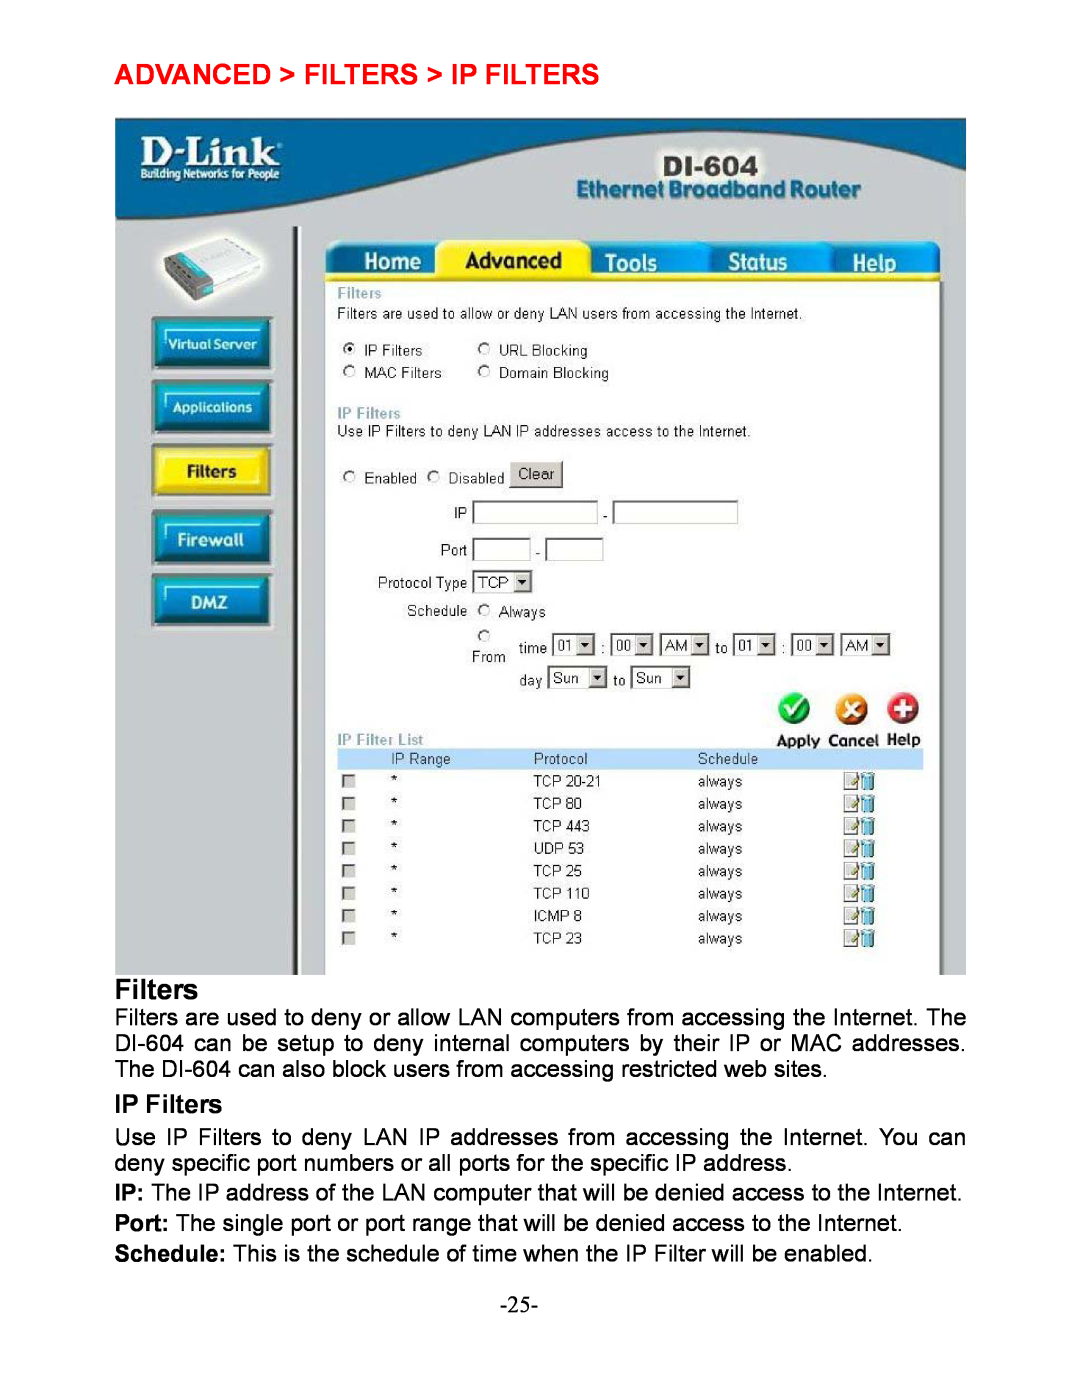 D-Link DI-604 manual Advanced Filters Ip Filters, IP Filters 